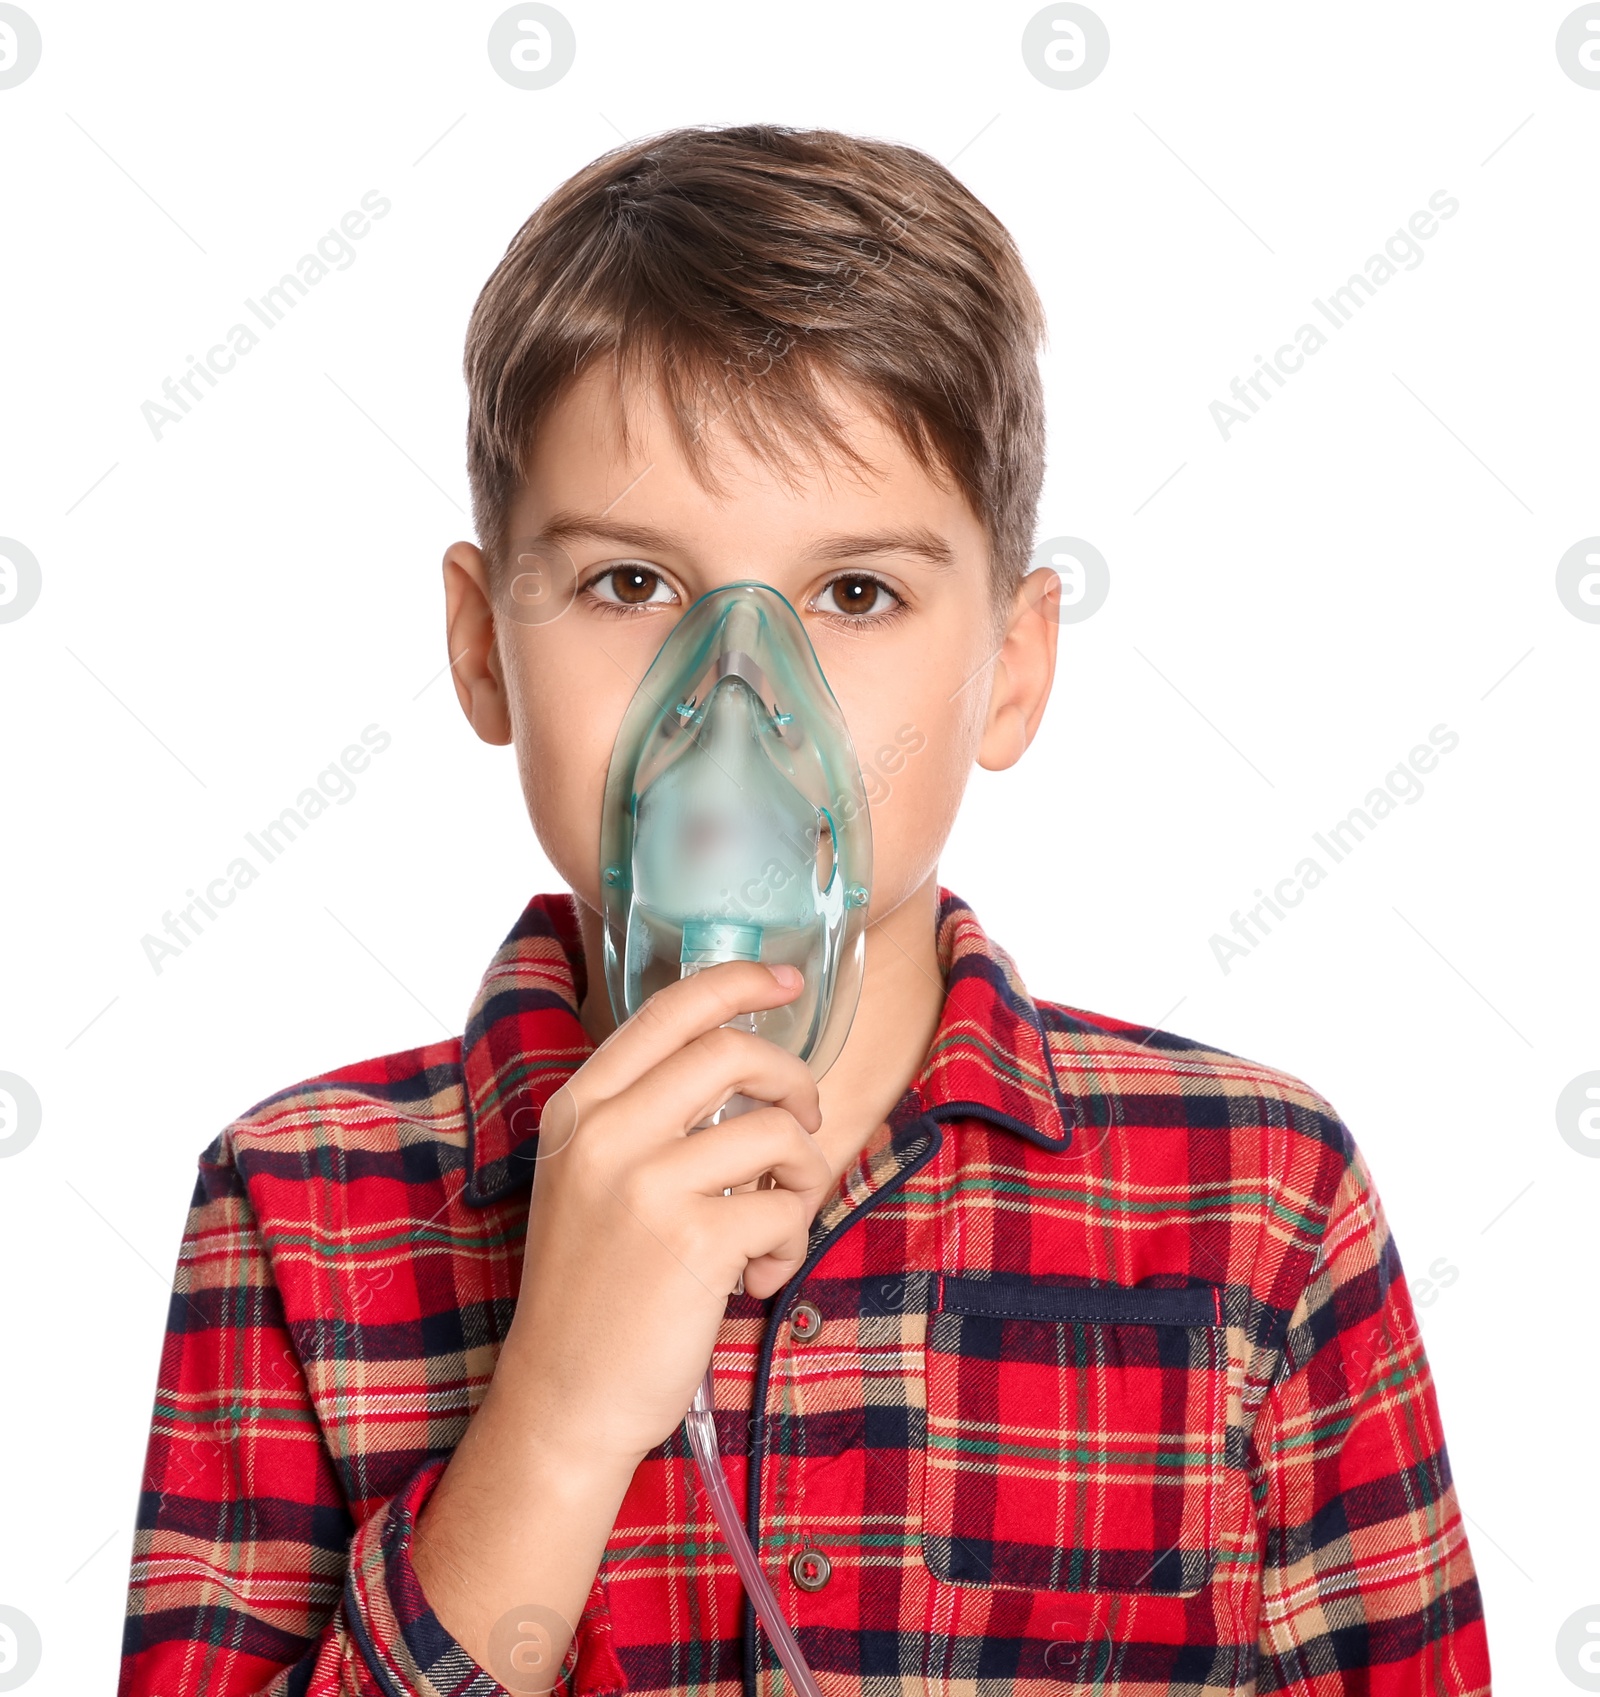 Photo of Boy using nebulizer for inhalation on white background